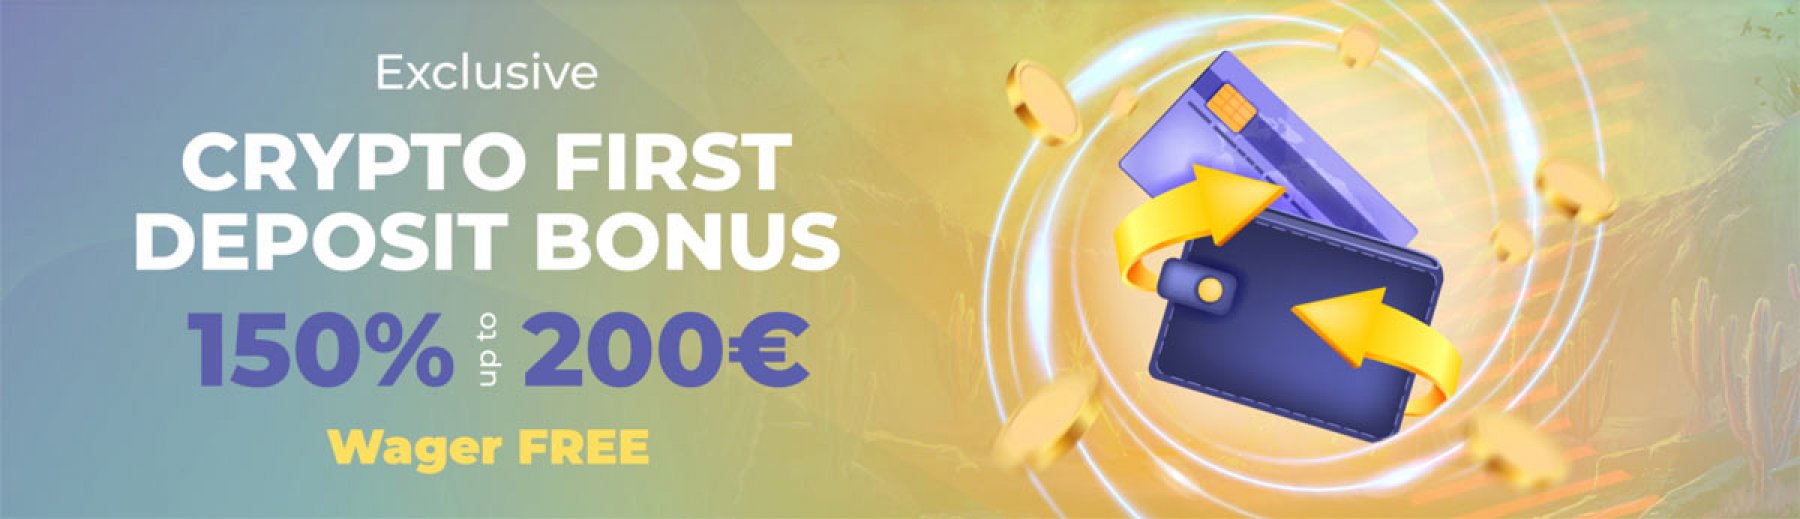 Crypto welcome bonus